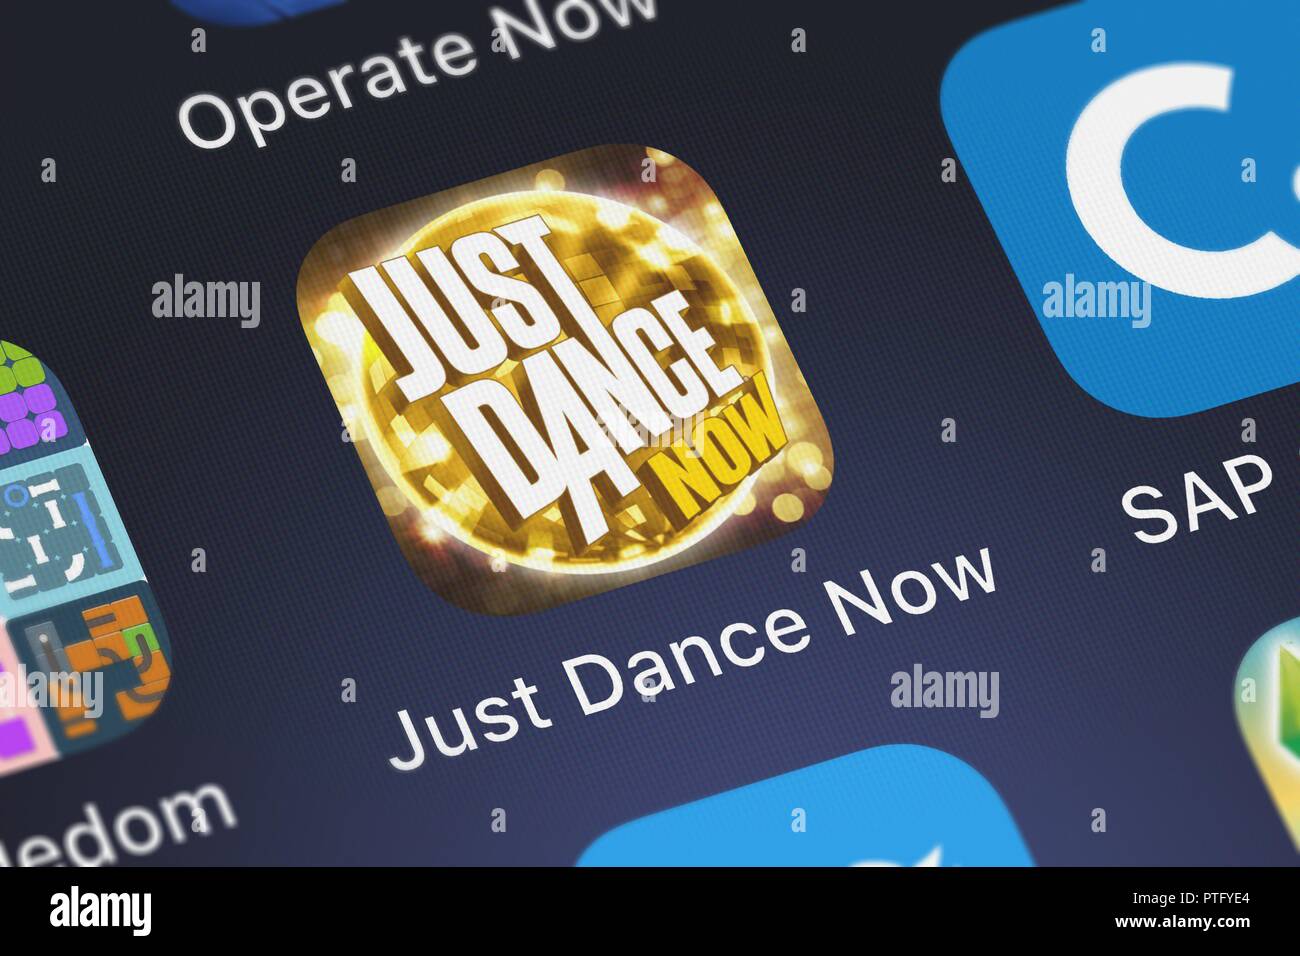 London, United Kingdom - October 09, 2018: Close-up shot of Ubisoft's popular app Just Dance Now. Stock Photo